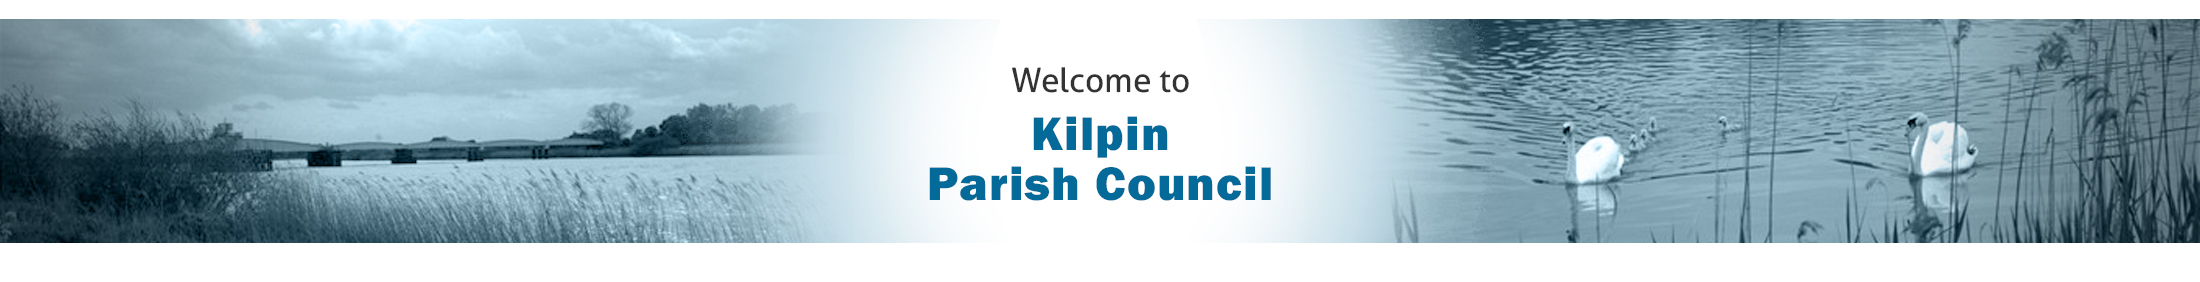 Header Image for Kilpin Parish Council